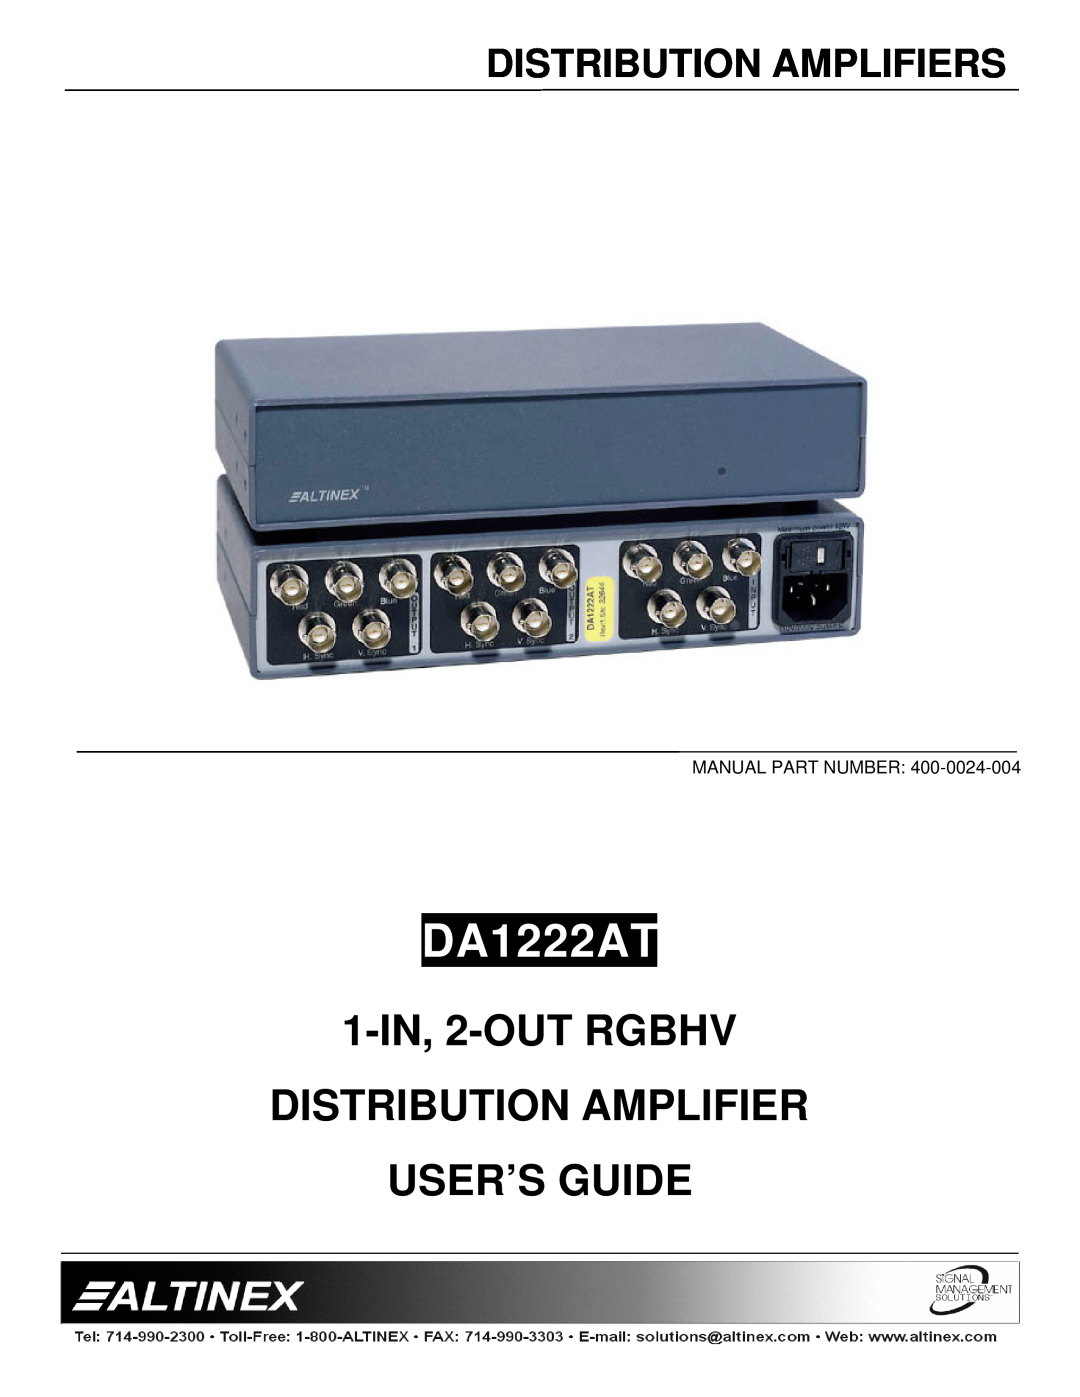 Altinex DA1222AT manual Distribution Amplifiers, 1-IN, 2-OUTRGBHV DISTRIBUTION AMPLIFIER, User’S Guide, Manual Part Number 